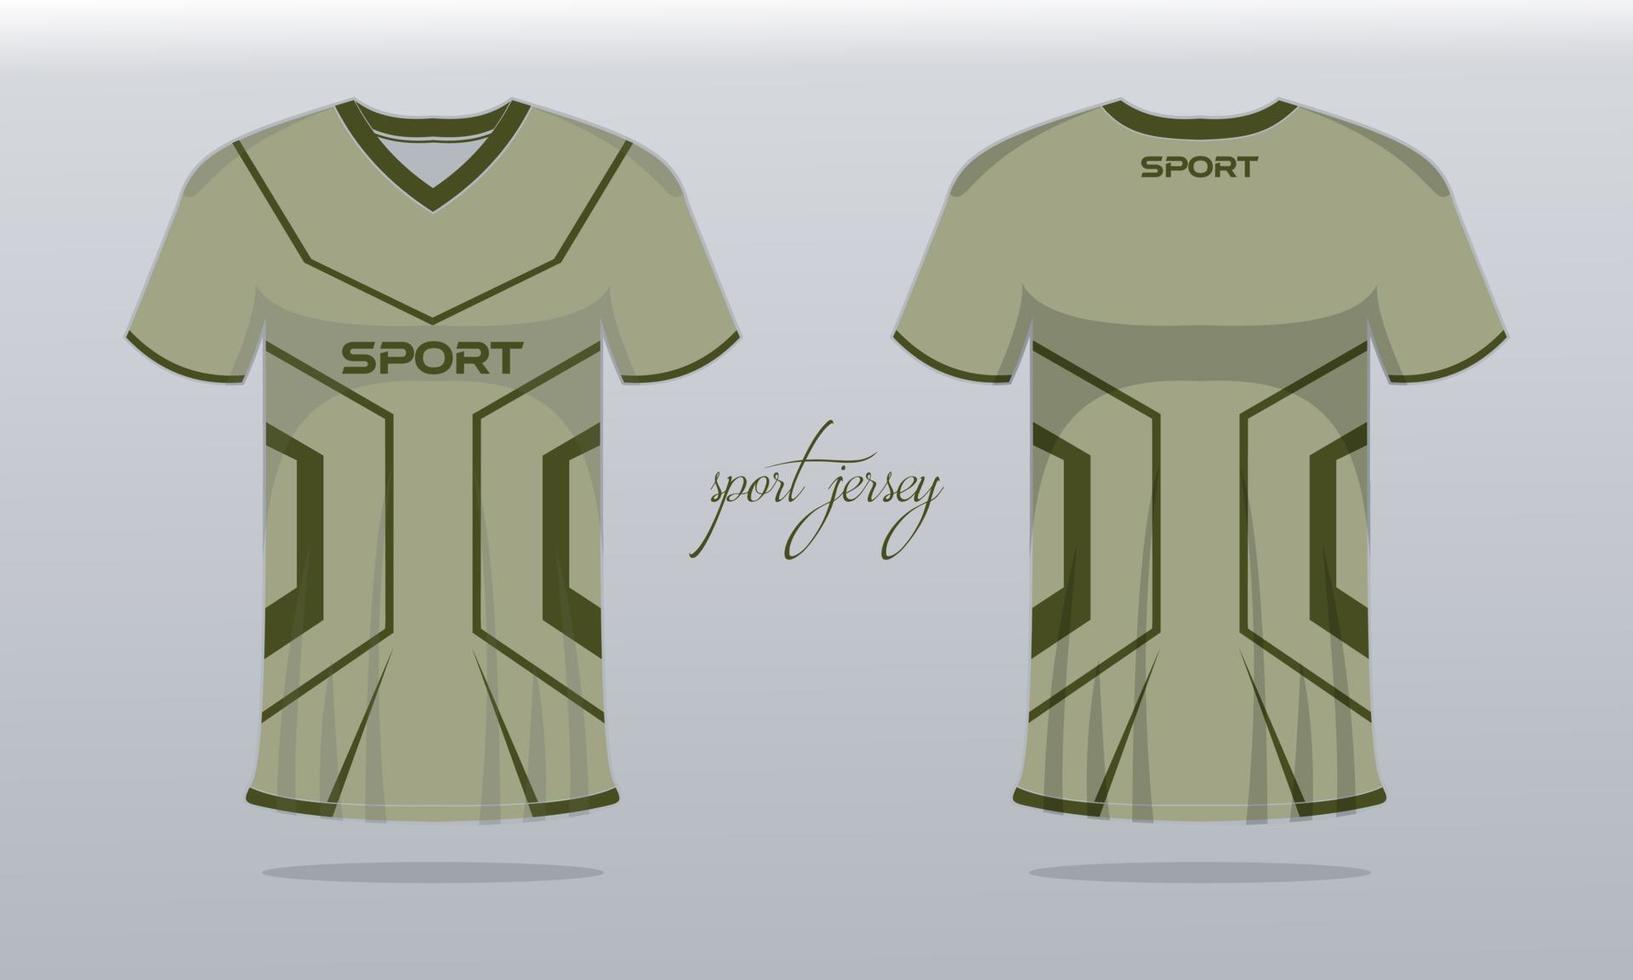 camisa esportiva e modelo de camiseta design de camisa esportiva. design esportivo para jogos de corrida de futebol vetor